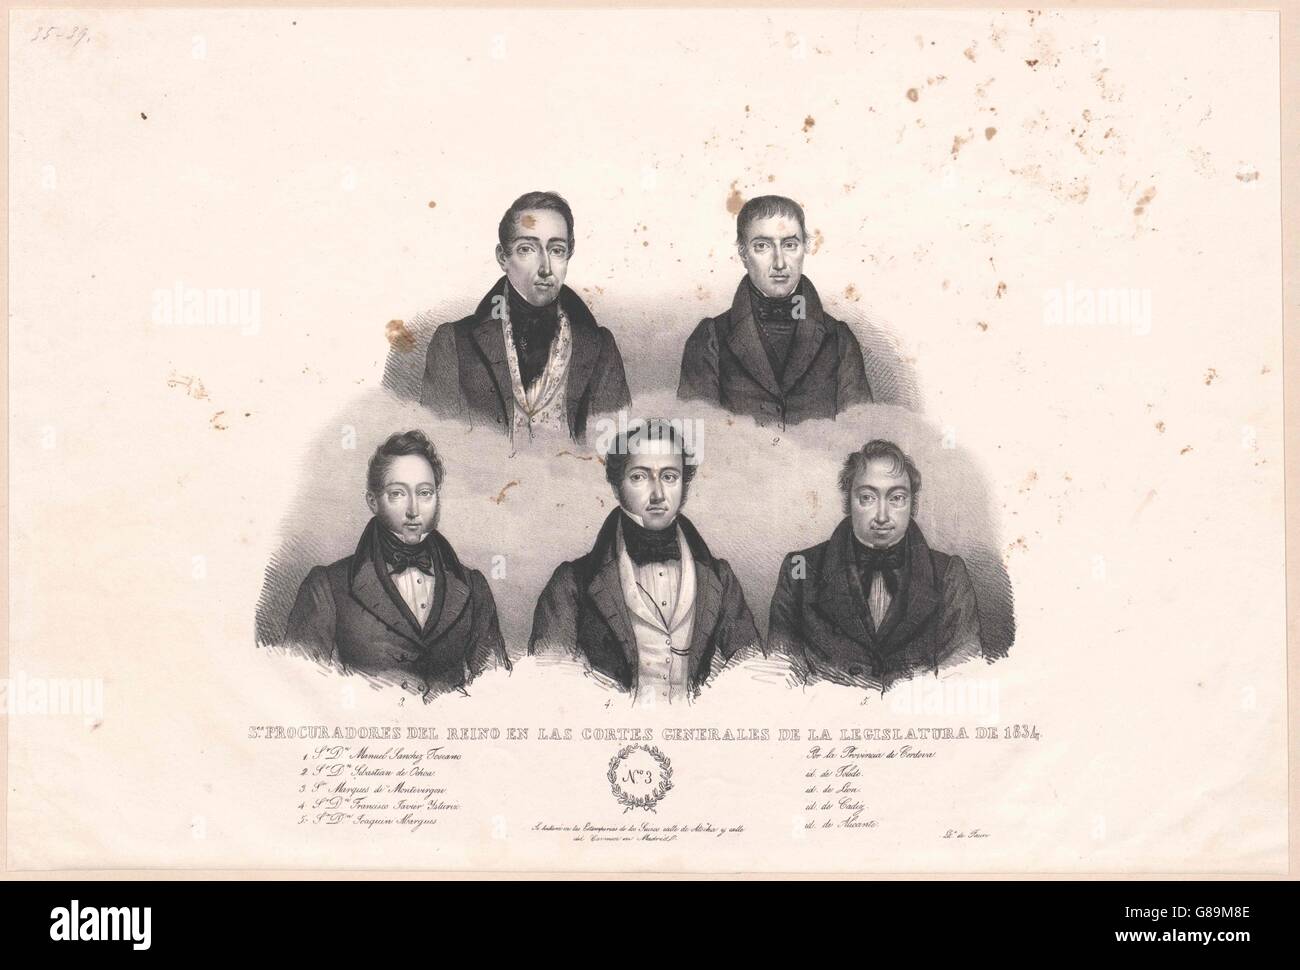 Bildnisse von f¸nf Prokuratoren der spanischen Cortes Generales de la Legislatura von 1834 Stock Photo